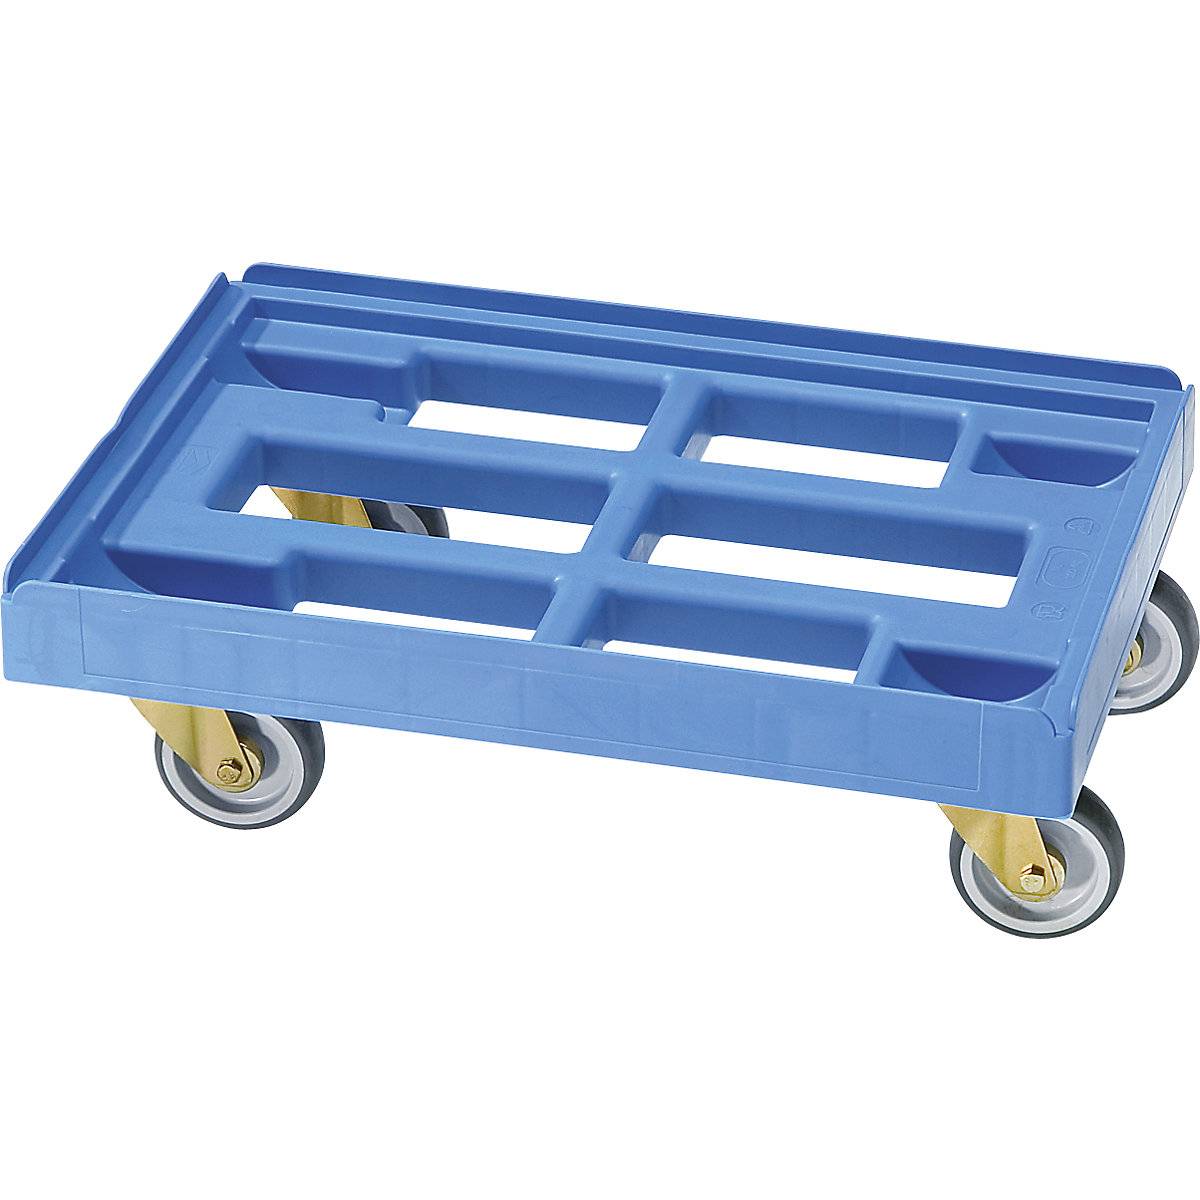 Transportroller, l x b = 610 x 410 mm, van HDPE, lichtblauw, vanaf 5 stuks-2